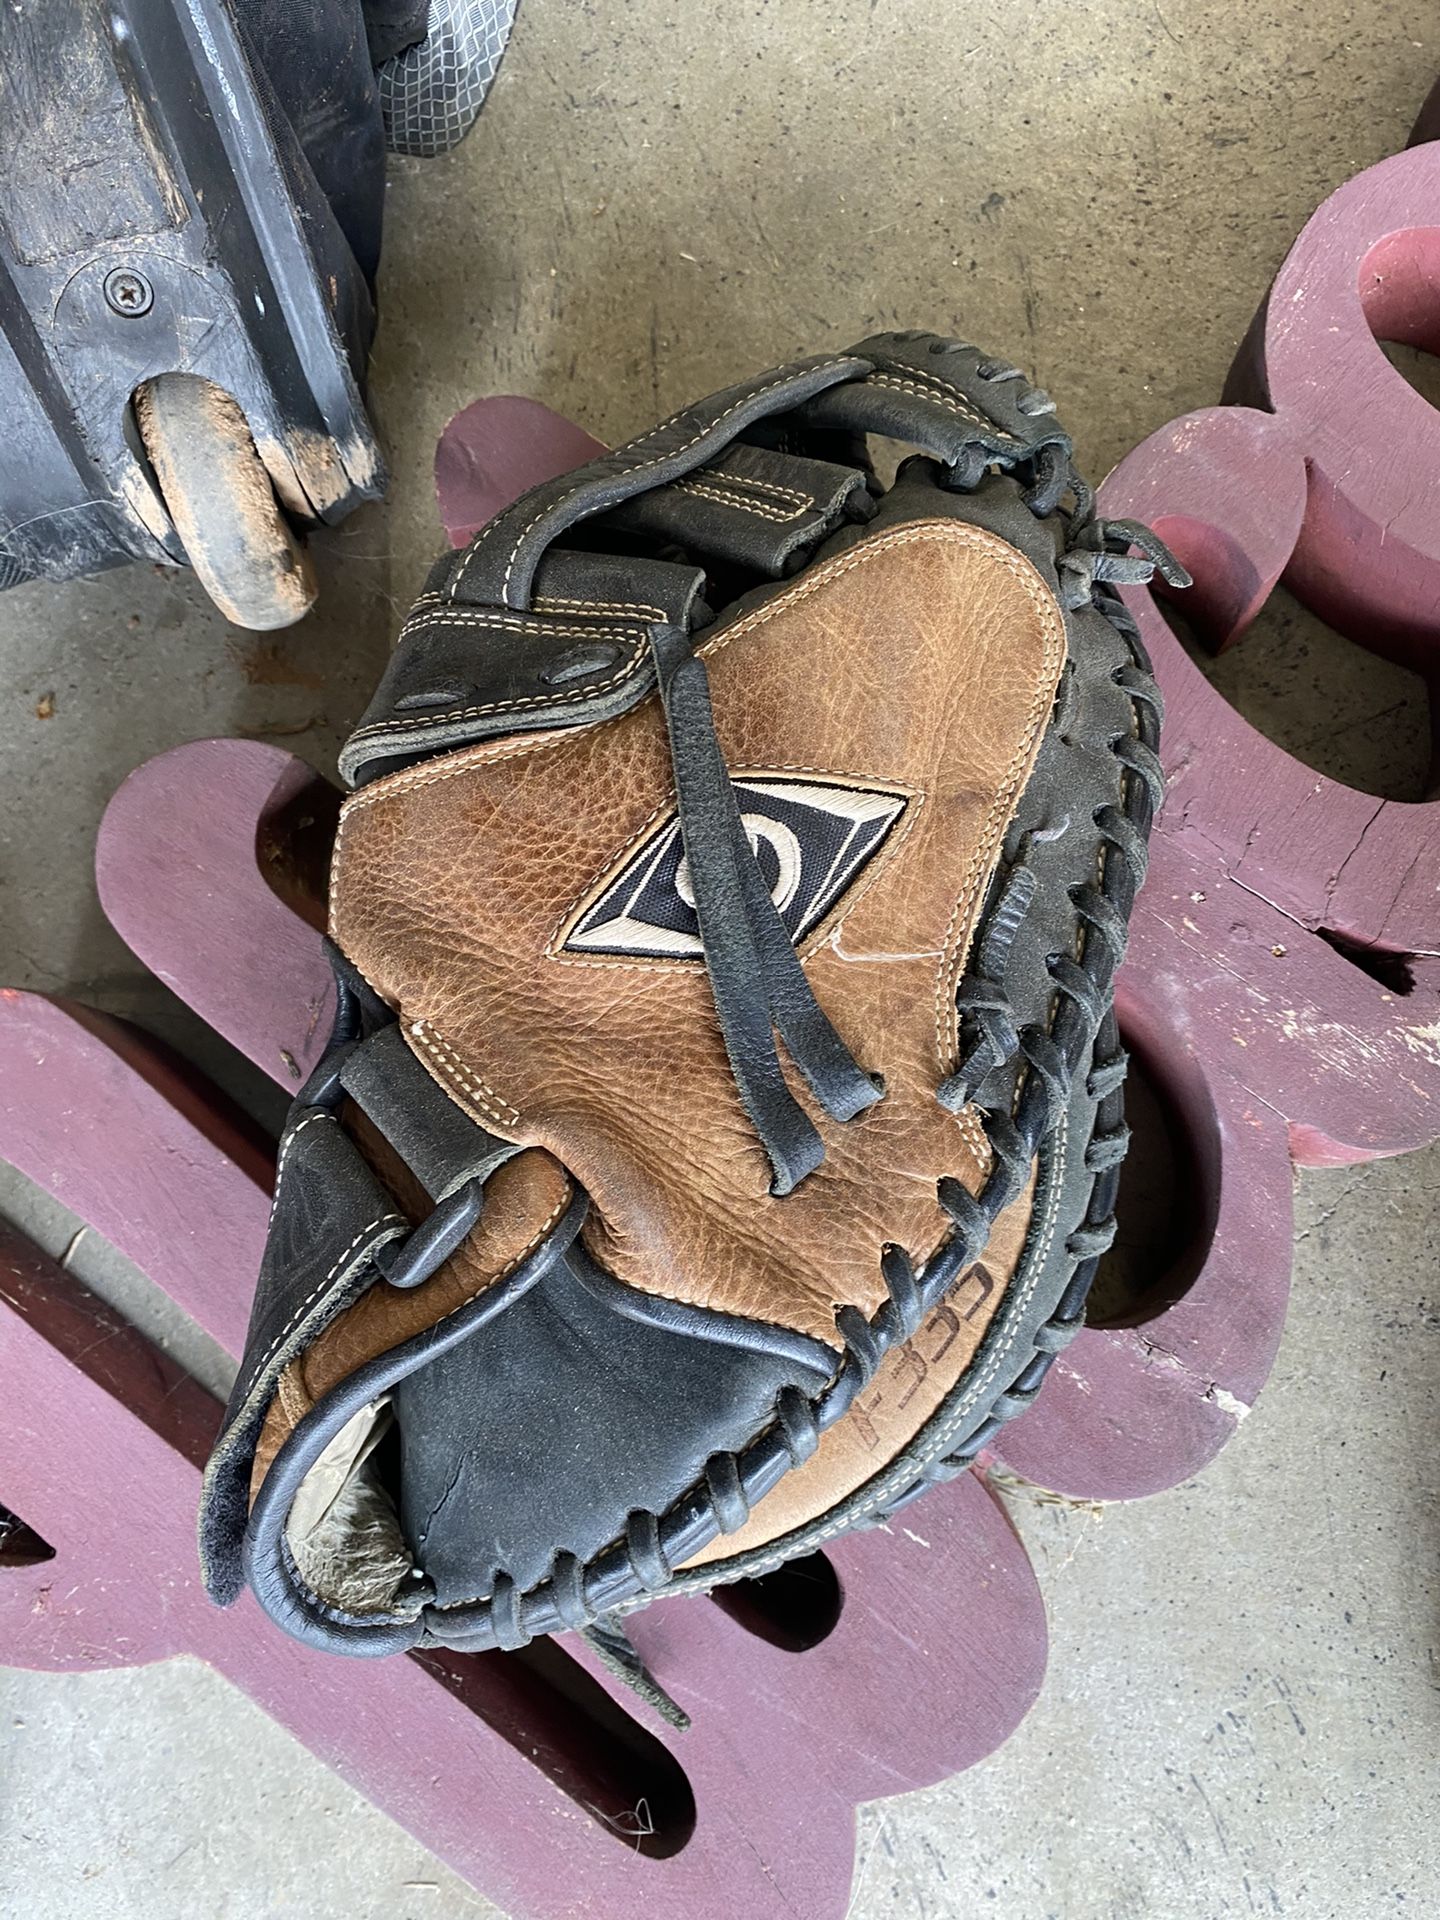 33” Diamond Softball catchers glove